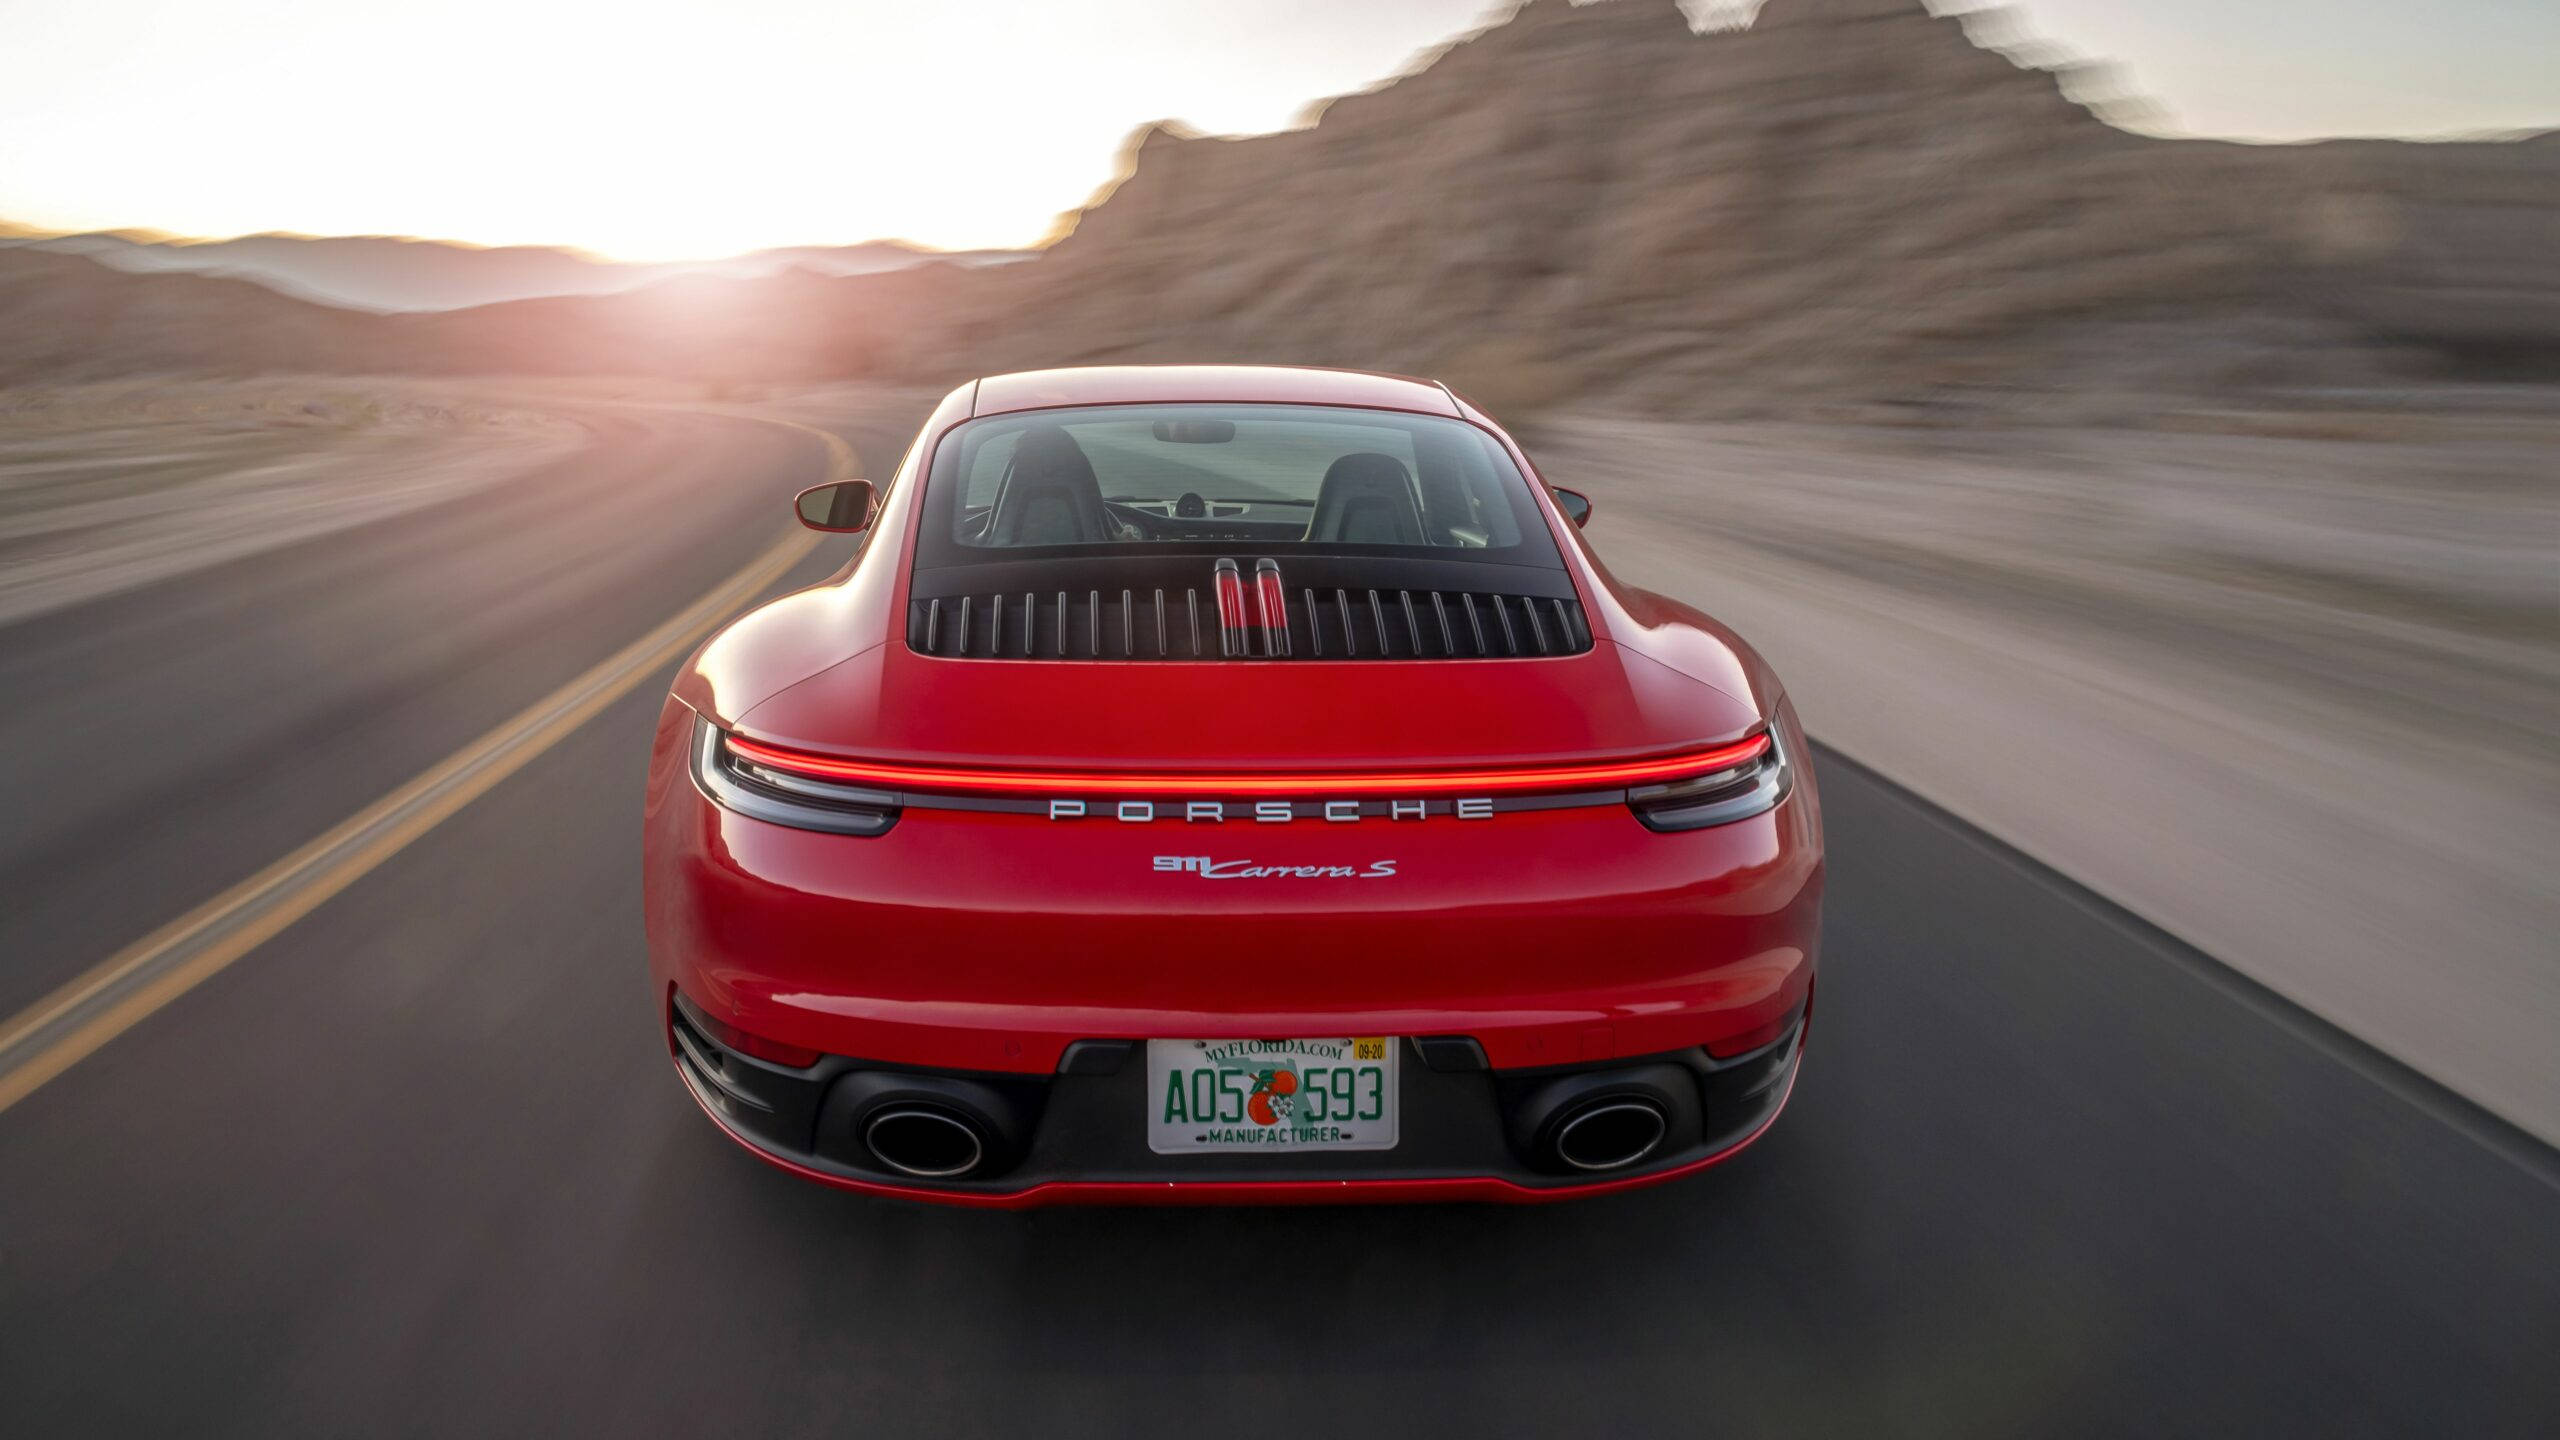 Back View Of Red Porsche 911 Wallpaper